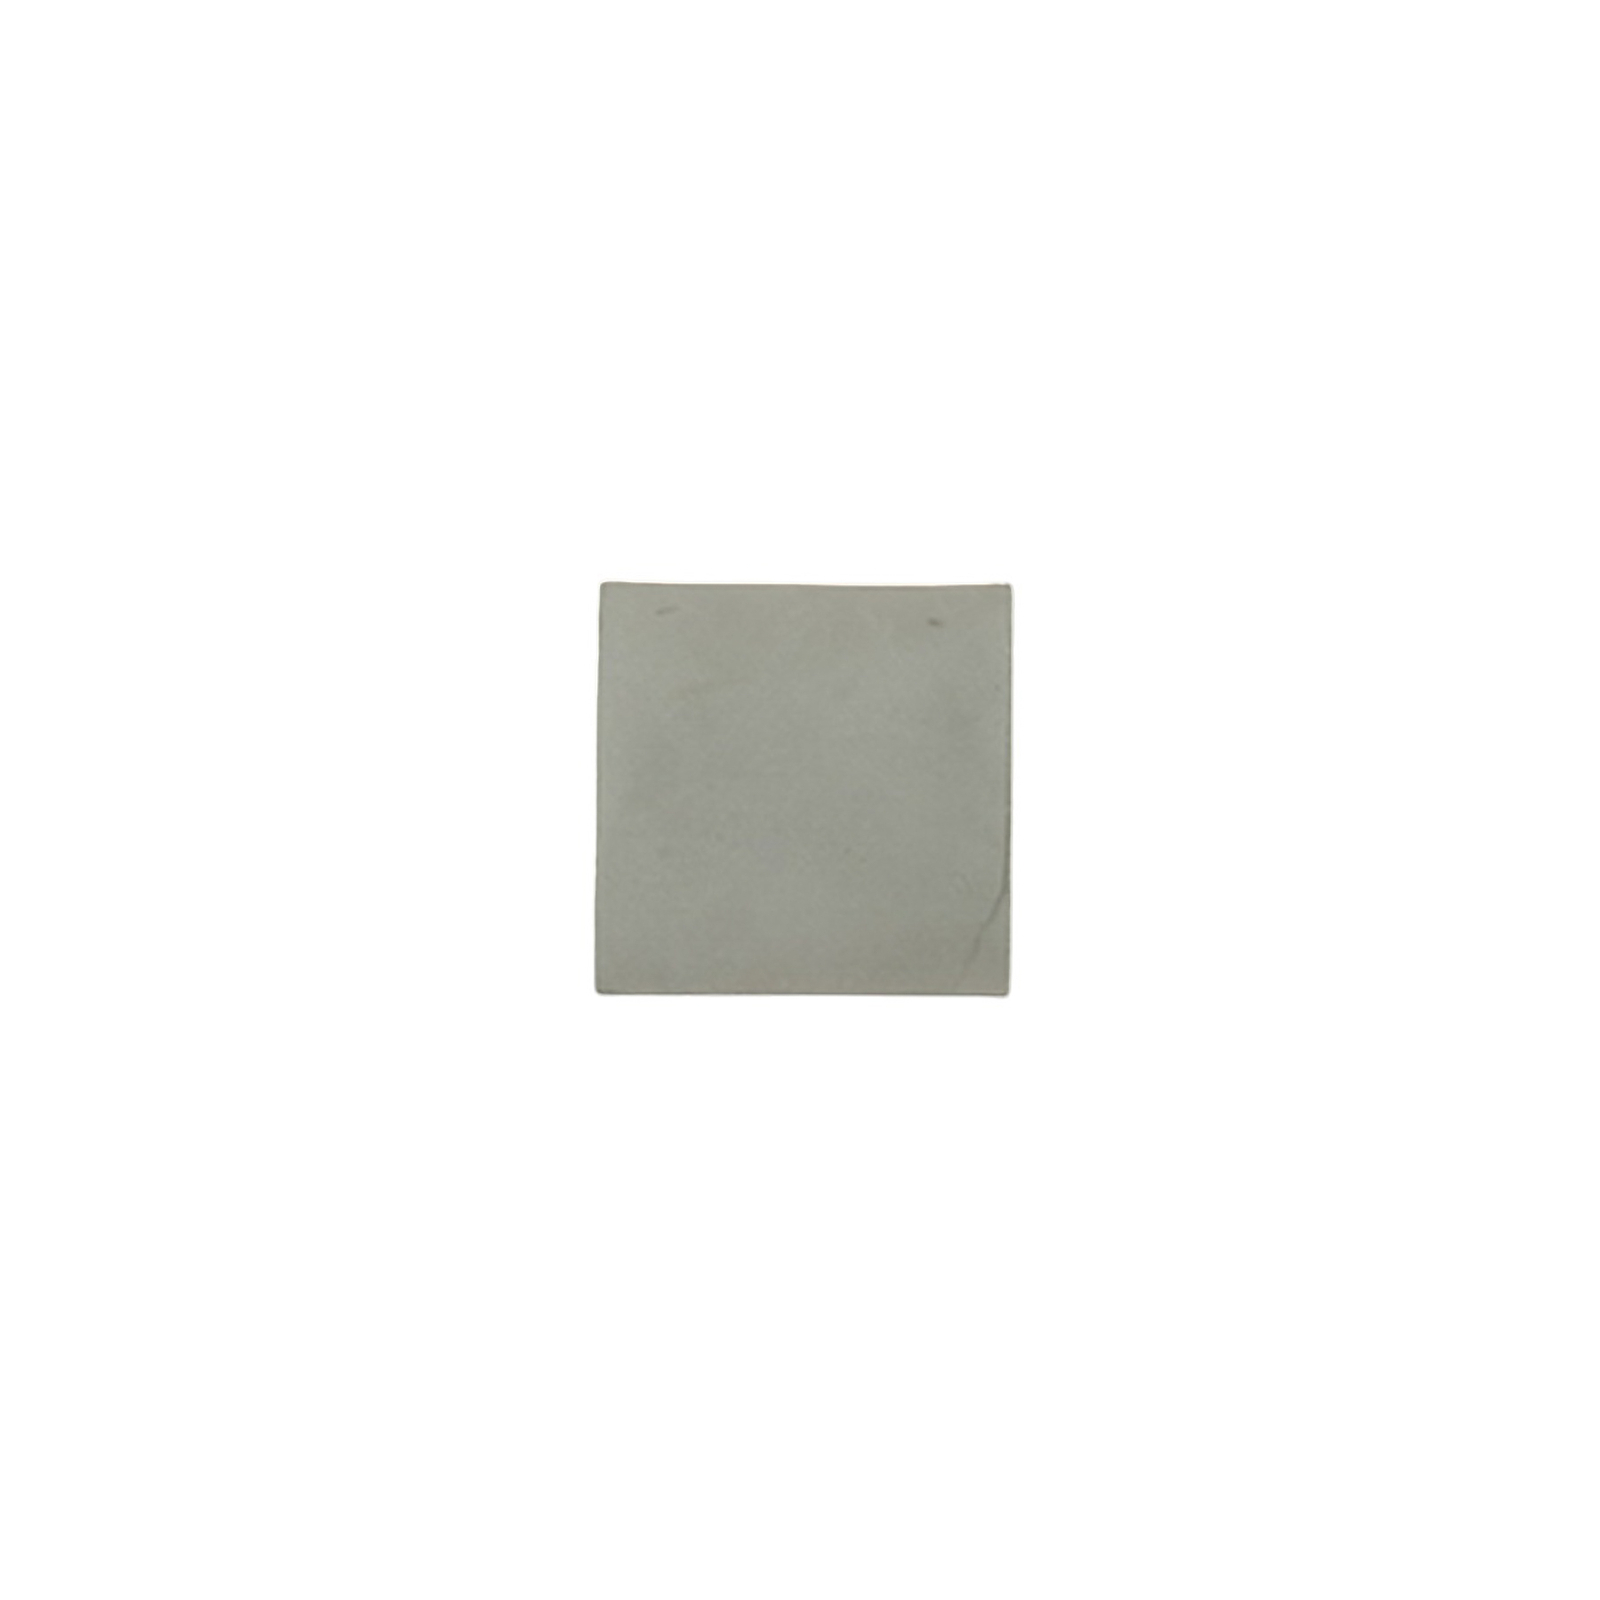 Wall light 180023, concrete, up/down, 11.5 cm wide